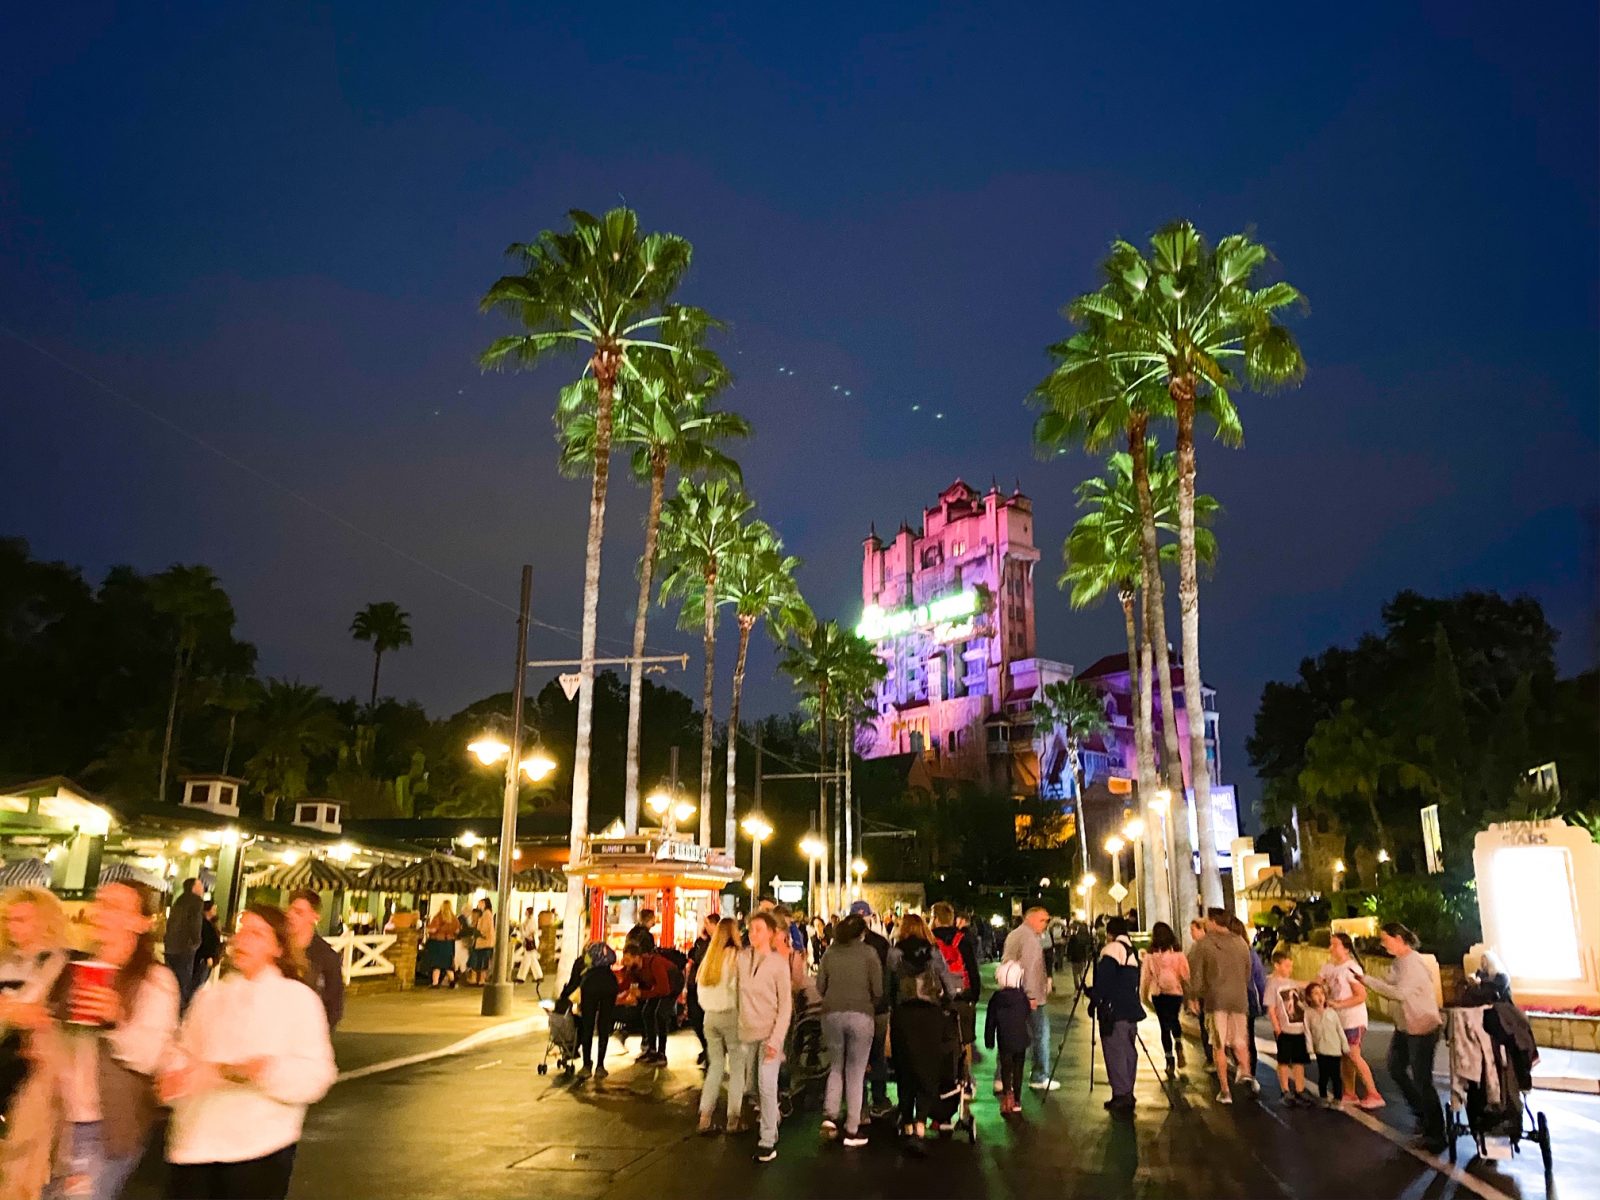 Night shot of Hollywood Tower of Terror at Disney World